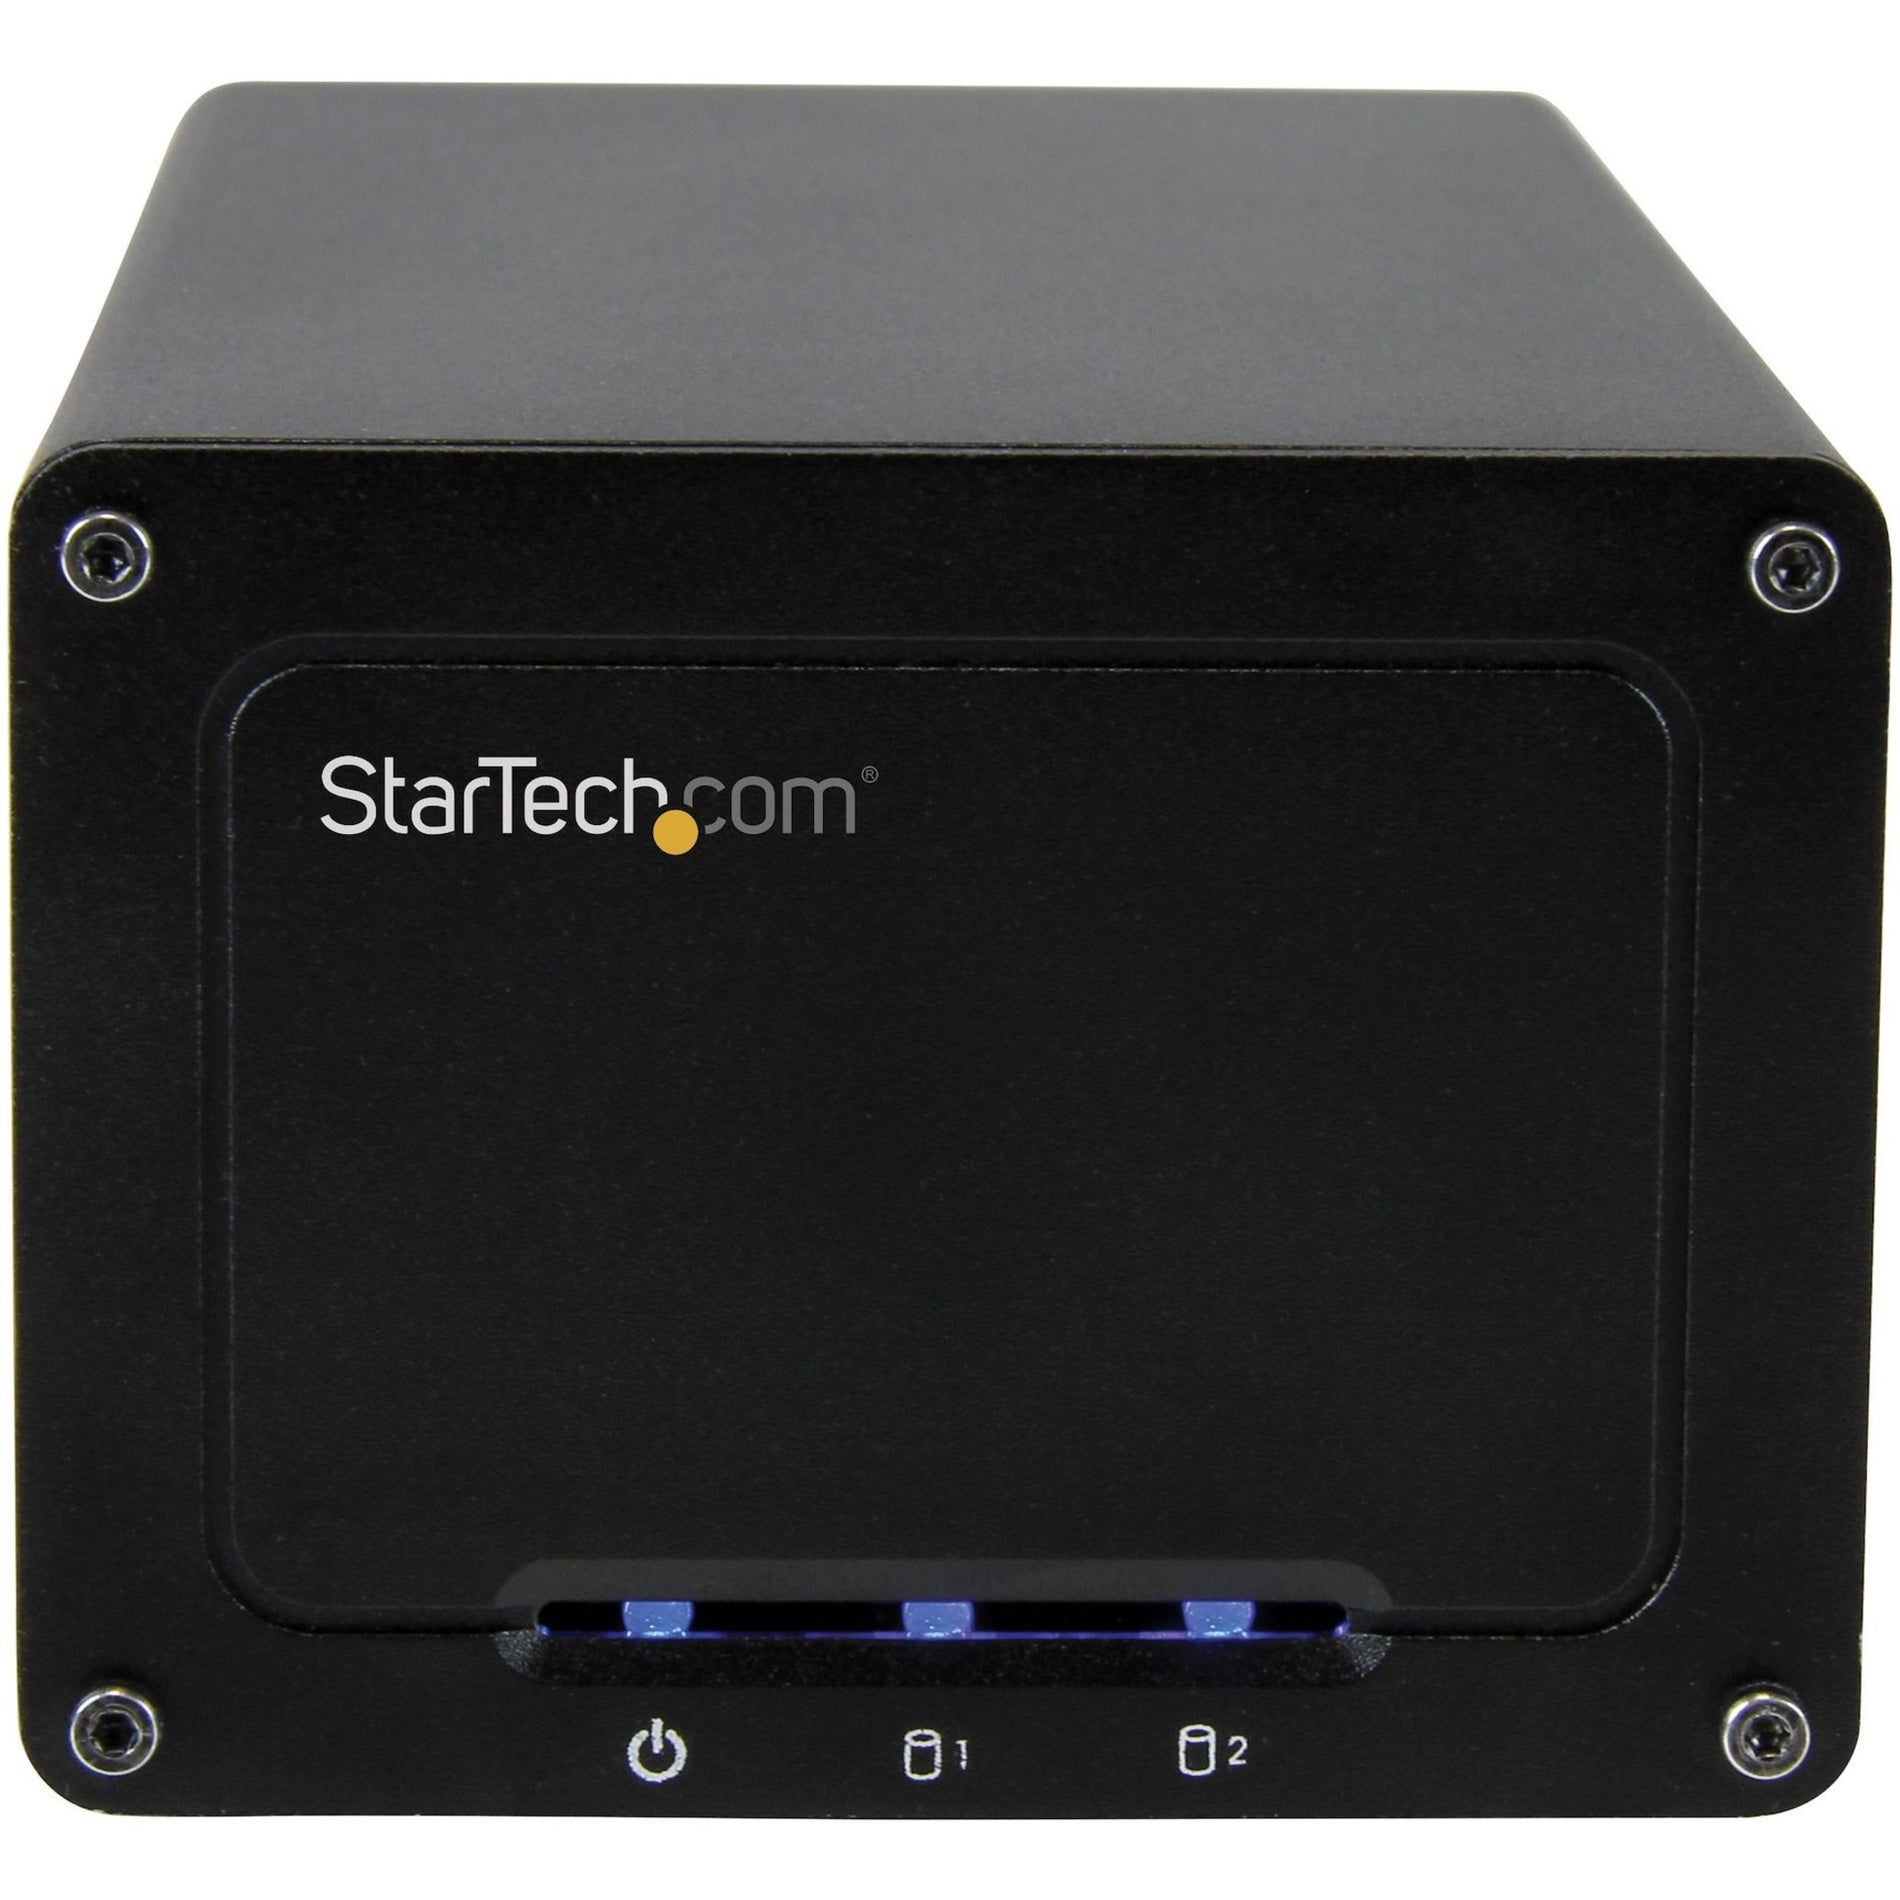 StarTech.com S252BU313R USB 3.1 Gen 2 (10Gbps) External Enclosure for Dual 2.5" SATA Drives, with RAID & UASP [Discontinued]